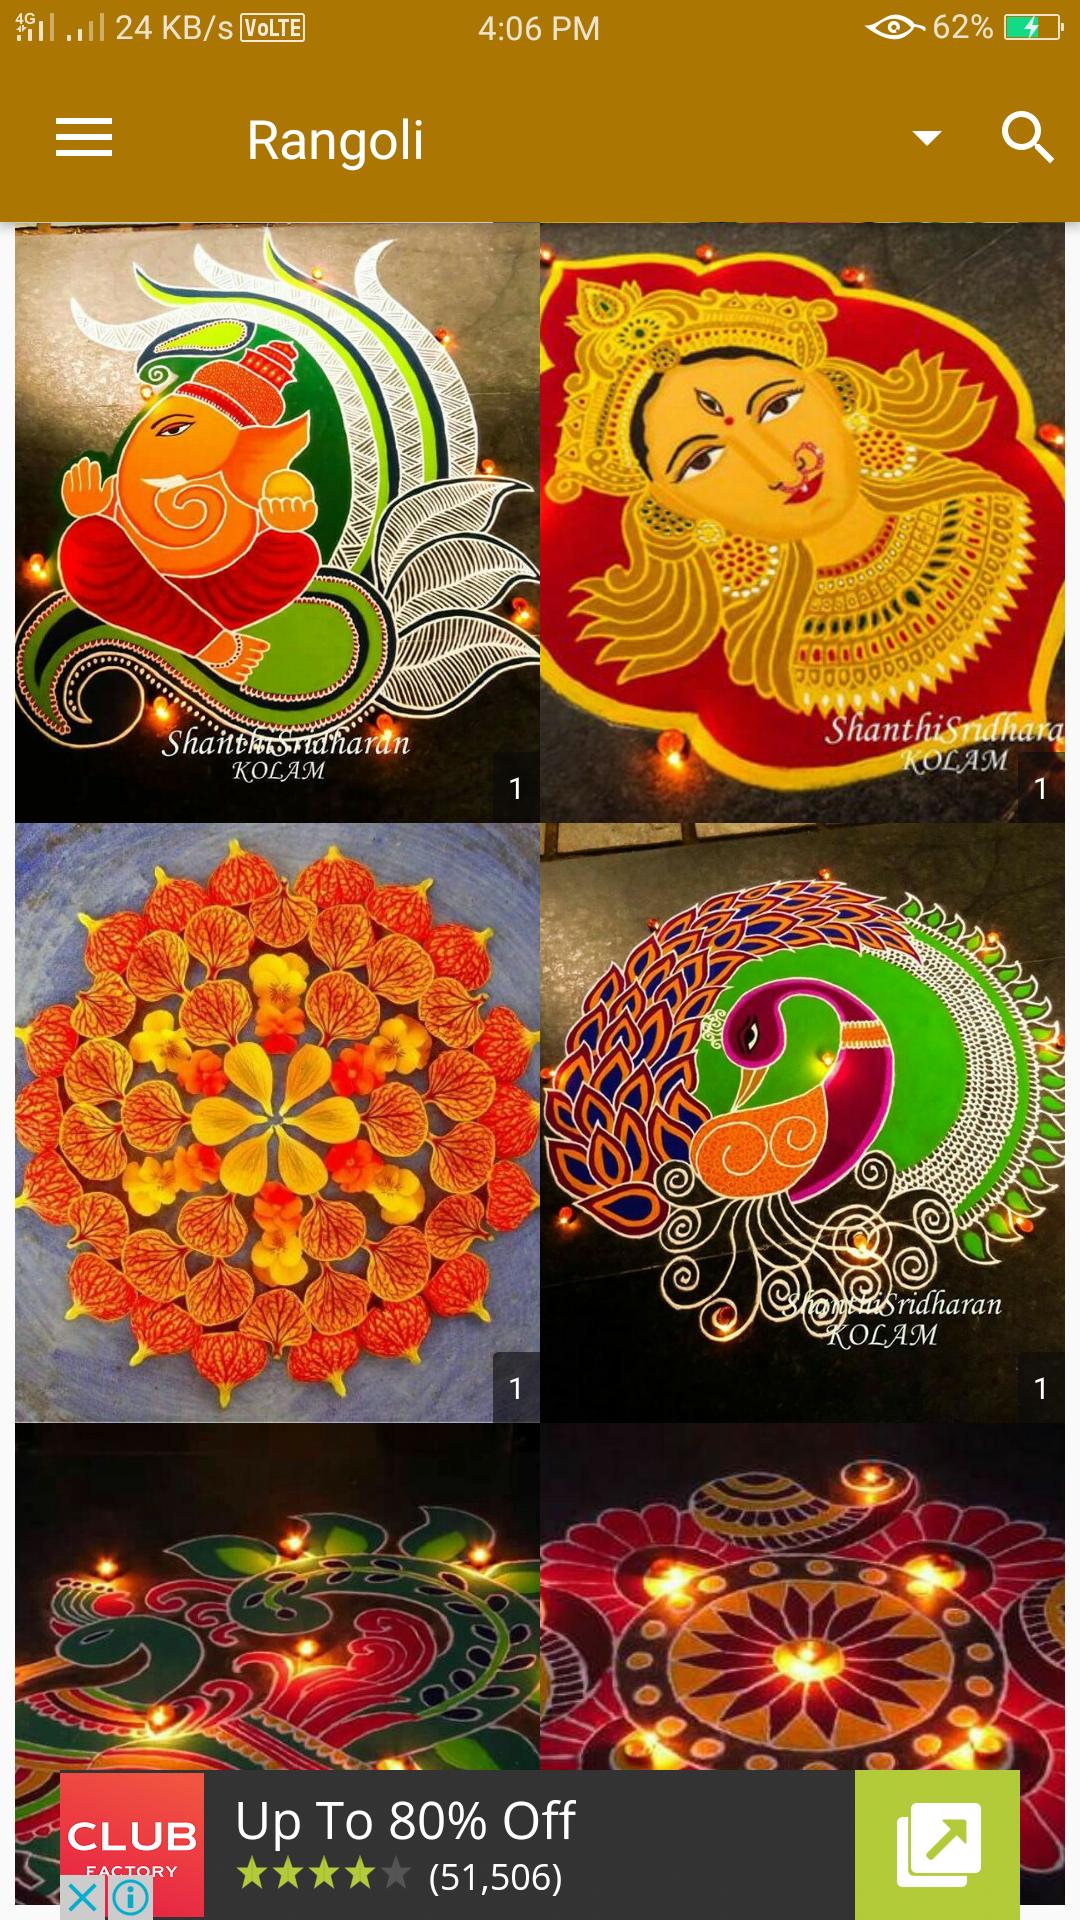 Diwali And Rangoli Wallpaper For Android Apk